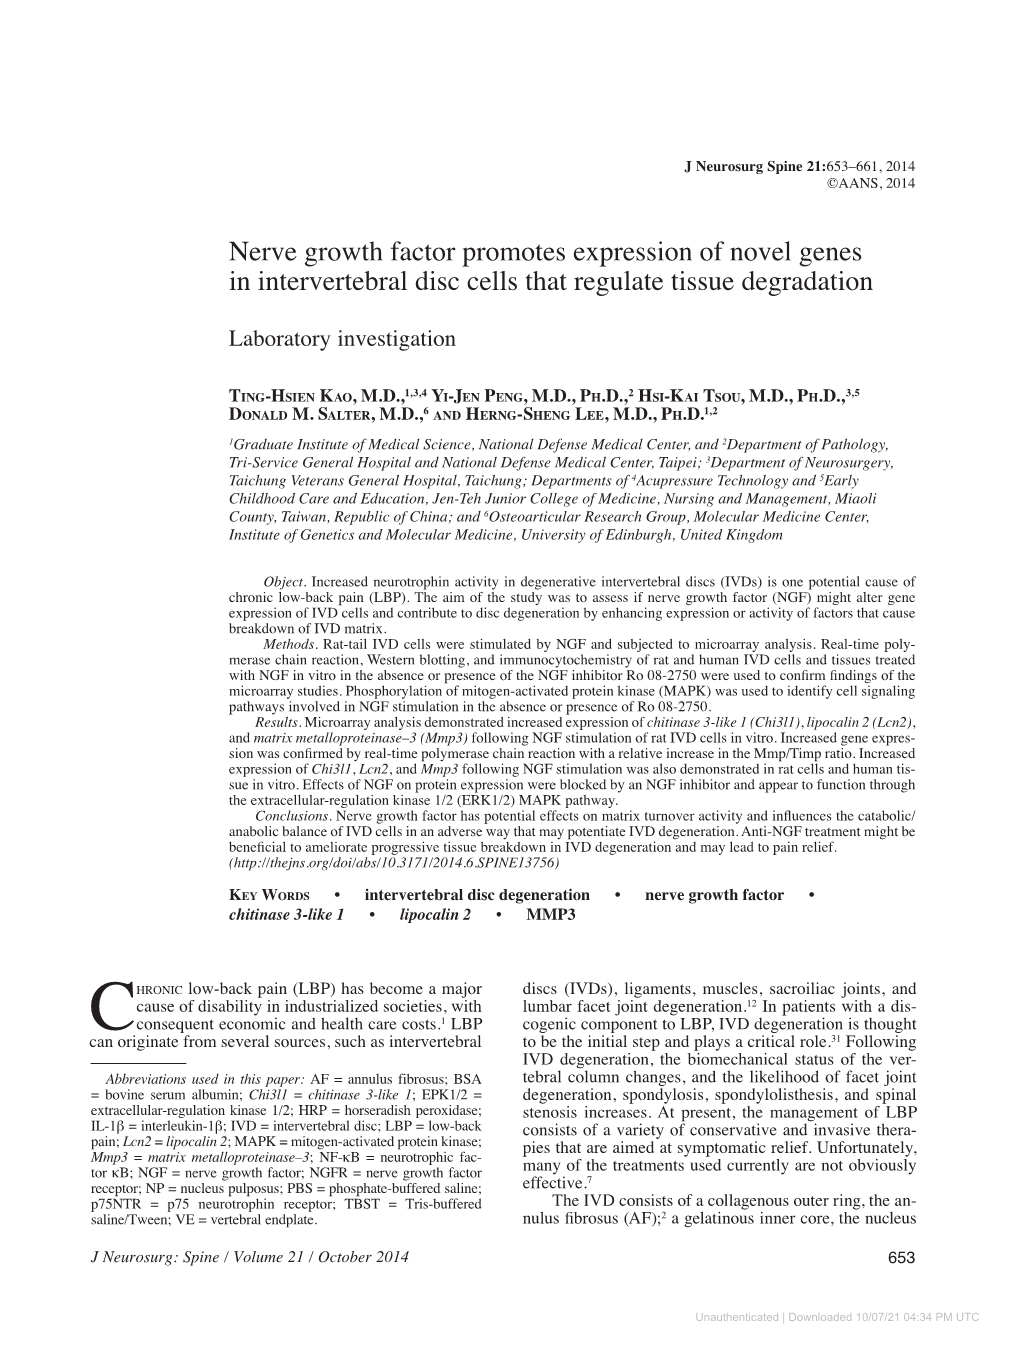 Nerve Growth Factor Promotes Expression of Novel Genes in Intervertebral Disc Cells That Regulate Tissue Degradation